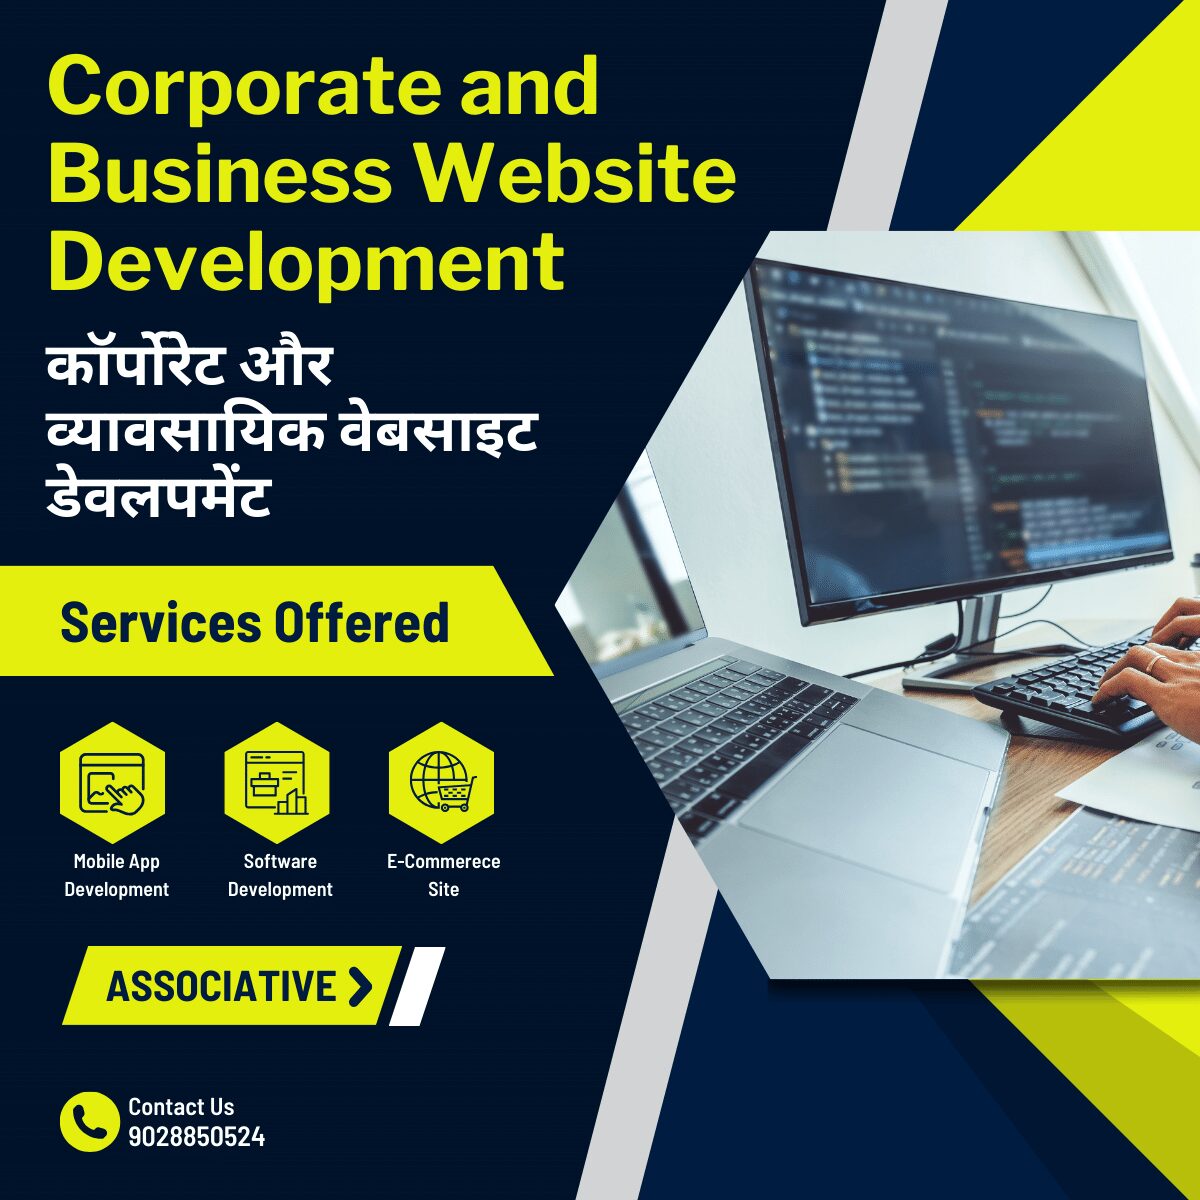 Corporate and Business Website Development कॉर्पोरेट और व्यावसायिक वेबसाइट डेवलपमेंट